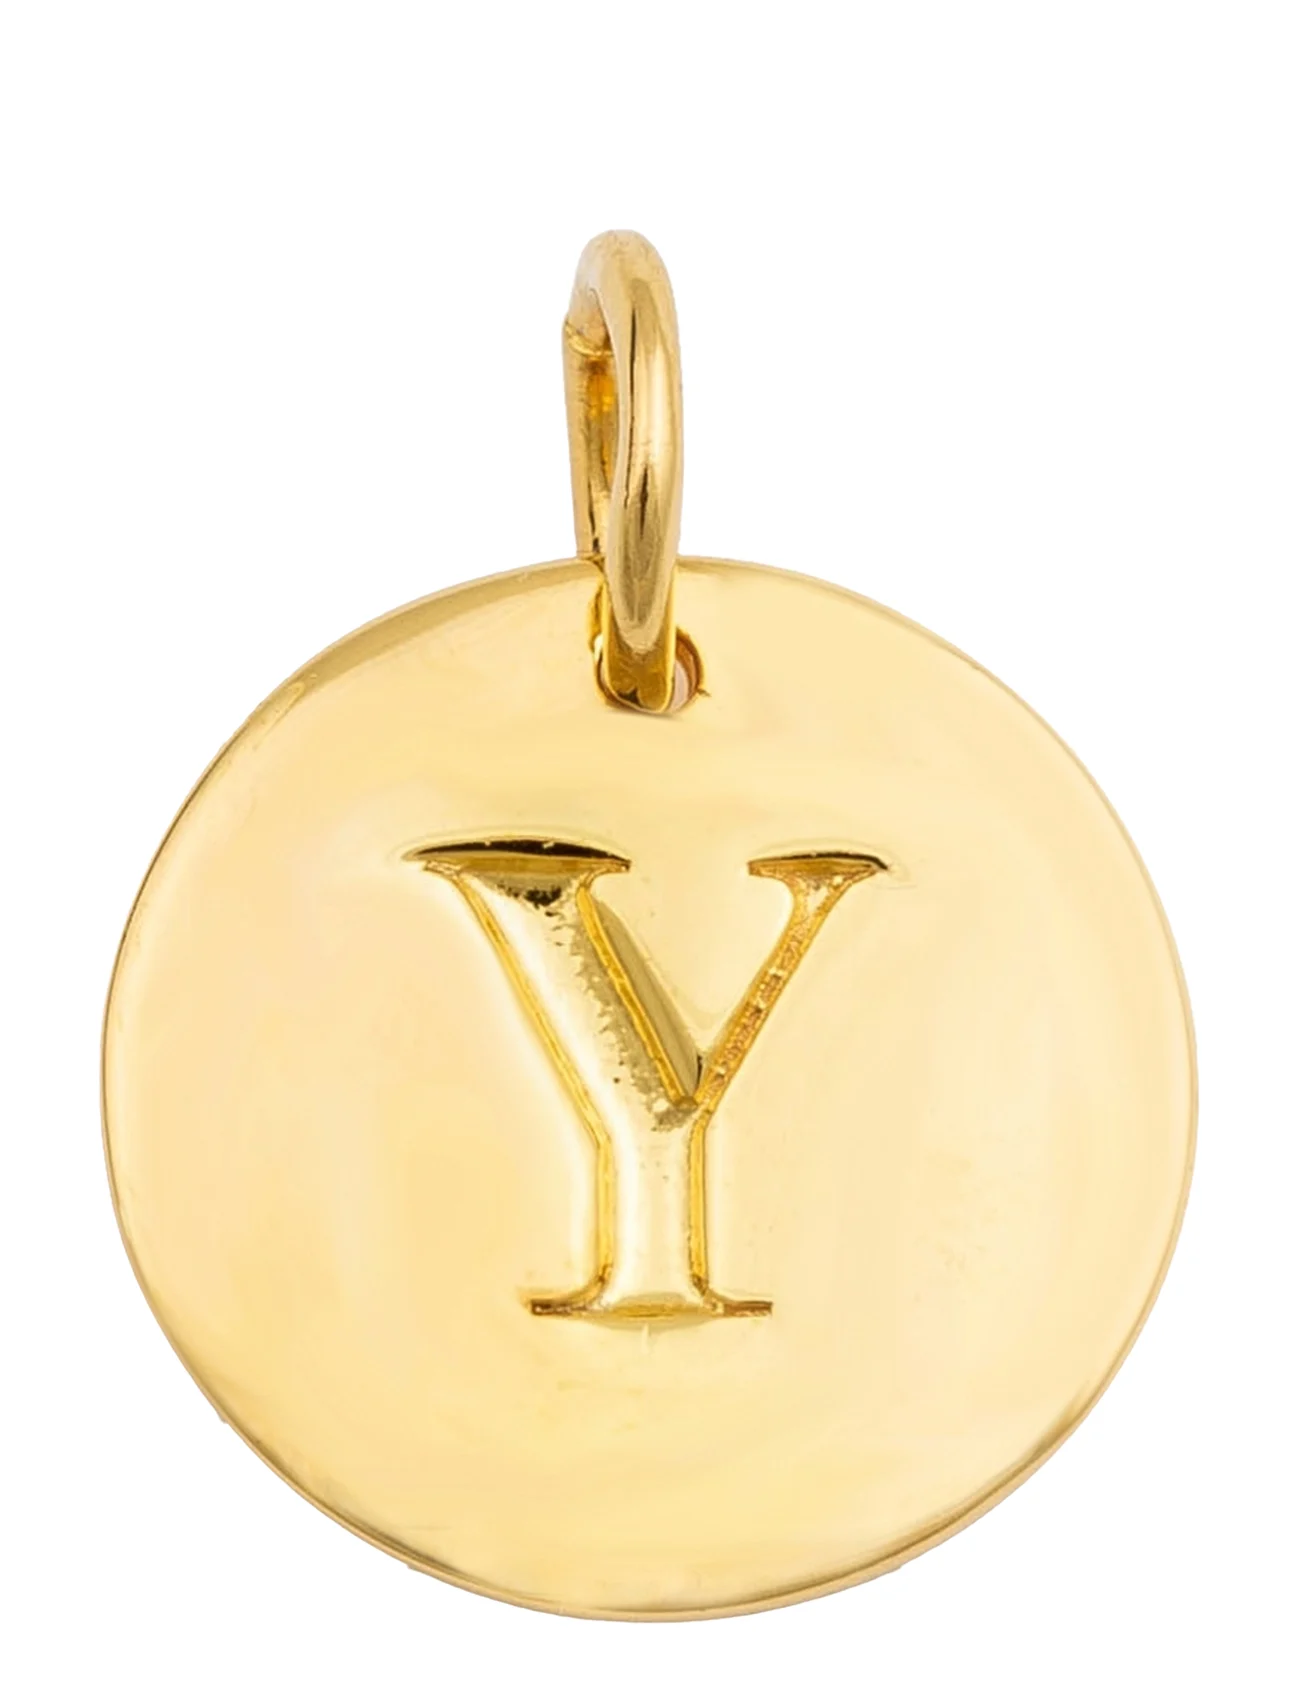 Syster P - Beloved Letter Gold - odzież imprezowa w cenach outletowych - gold - 0